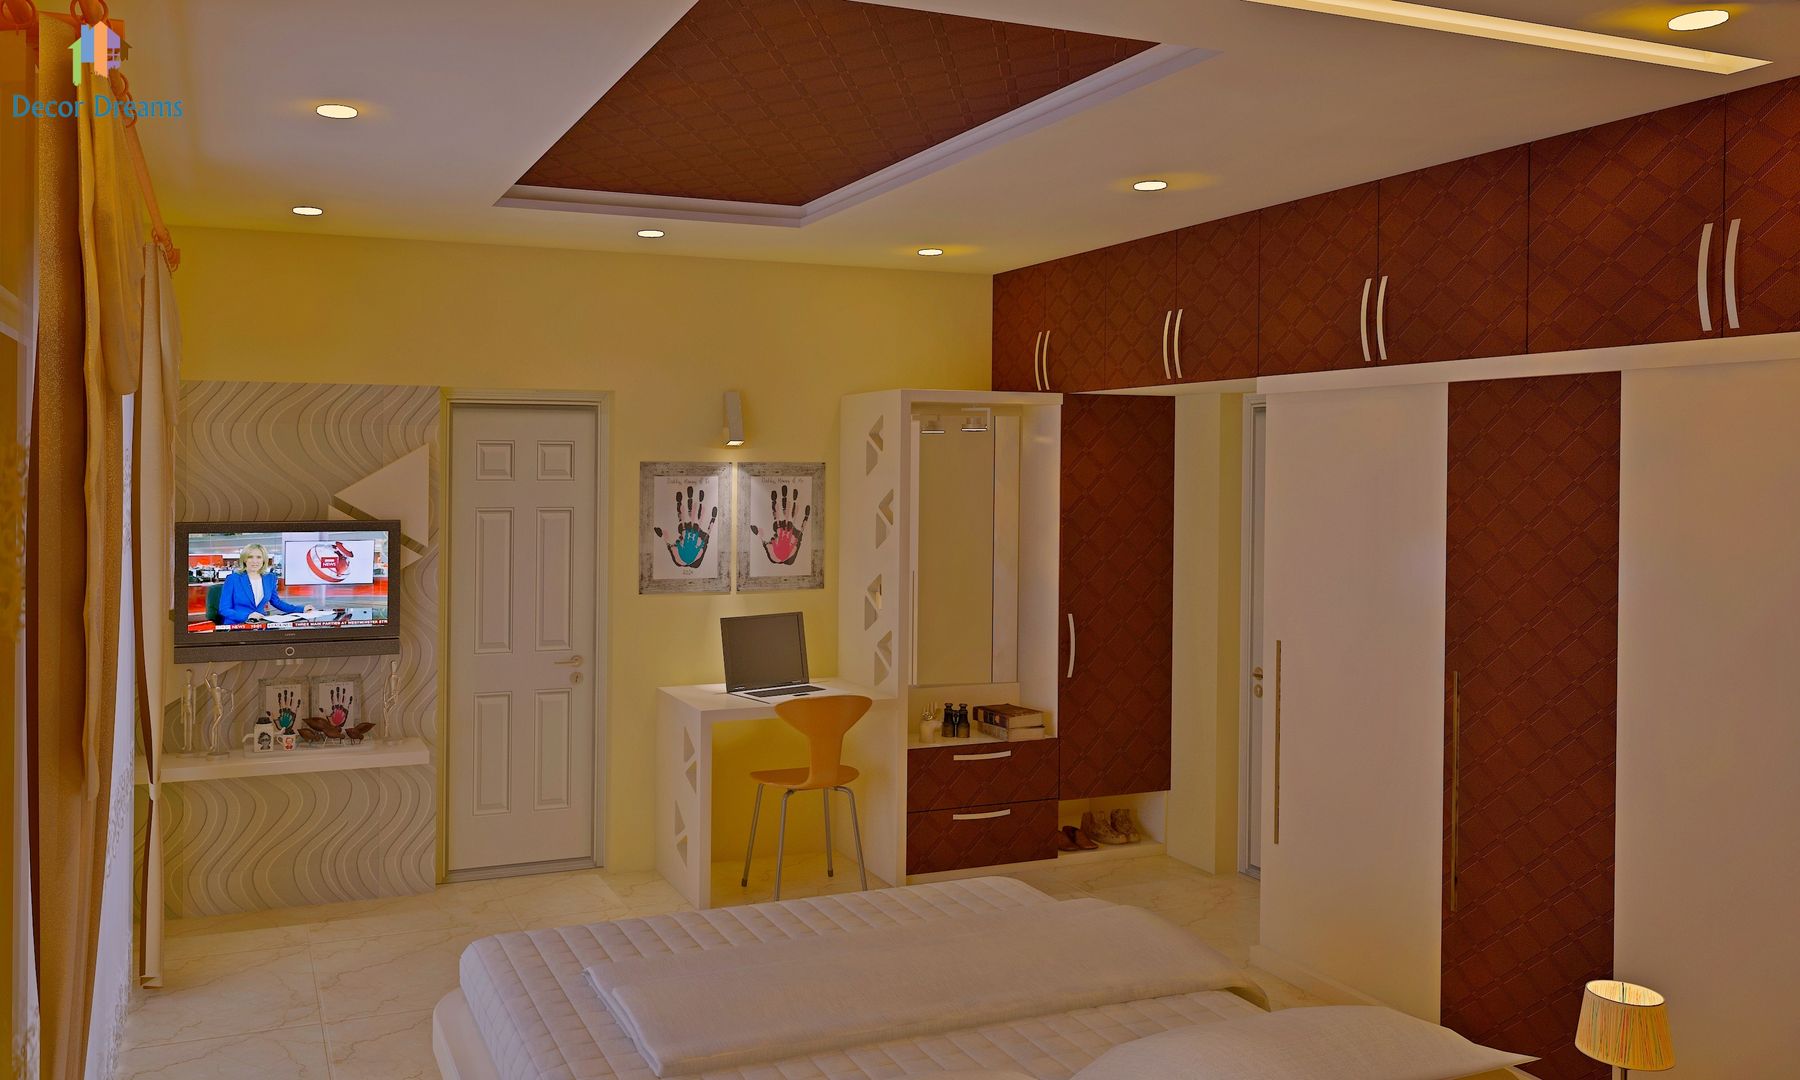 Sobha City, 3 BHK - Mr. Agrawal, DECOR DREAMS DECOR DREAMS Modern style bedroom